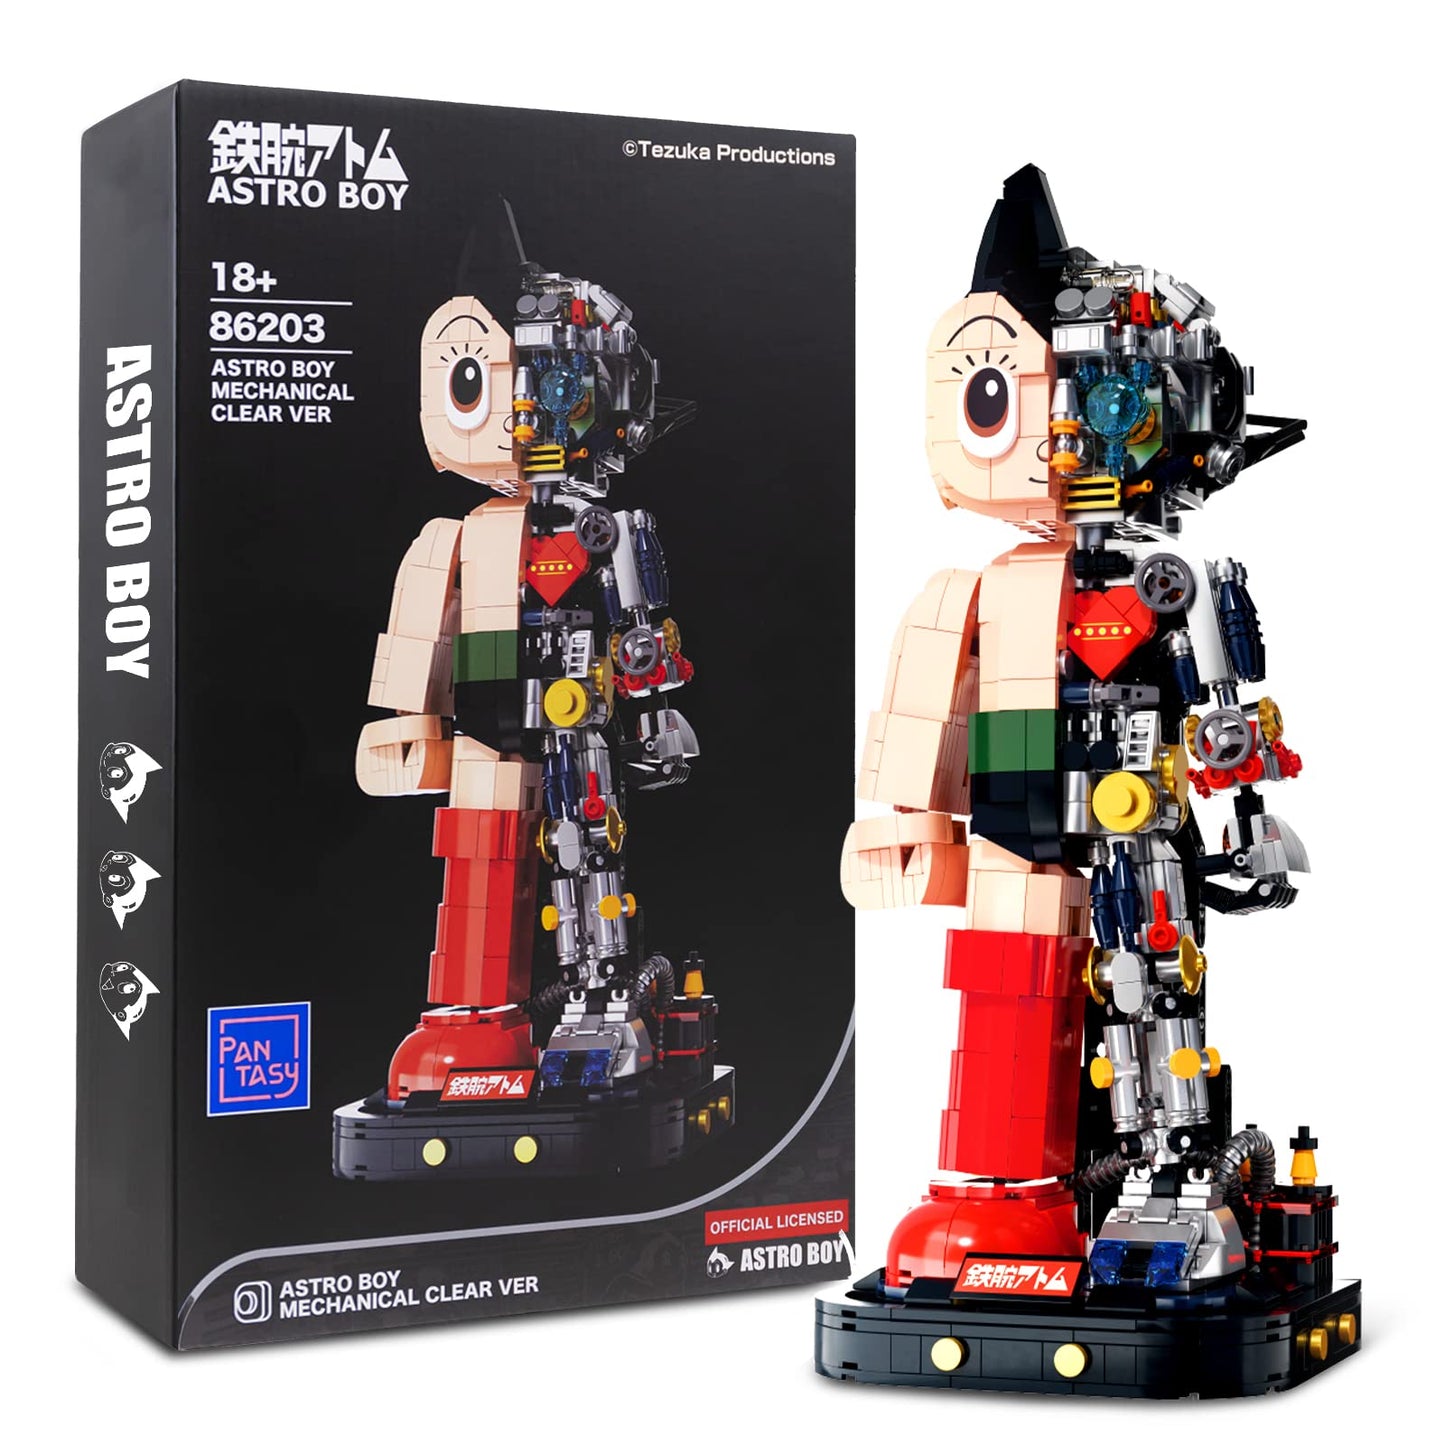 Pantasy Building Blocks: Astro Boy Classic Edition Building Kit